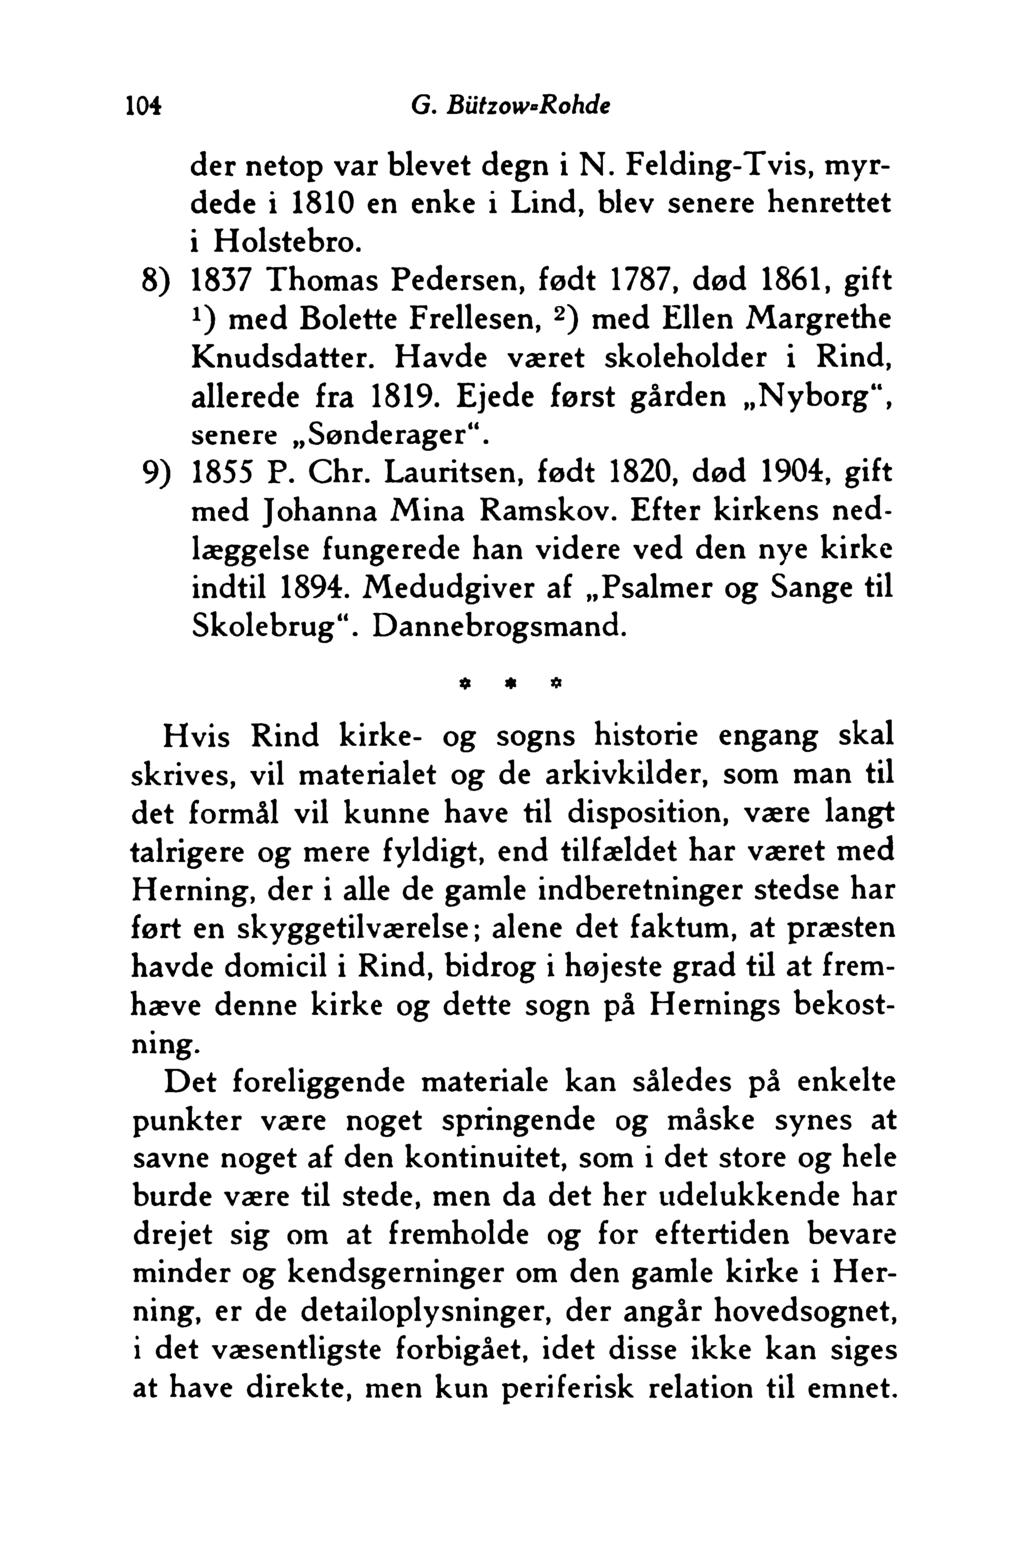 104 G. Bützow Rohde der netop var blevet degn i N. Felding-Tvis, myrdede i 1810 en enke i Lind, blev senere henrettet i Holstebro.